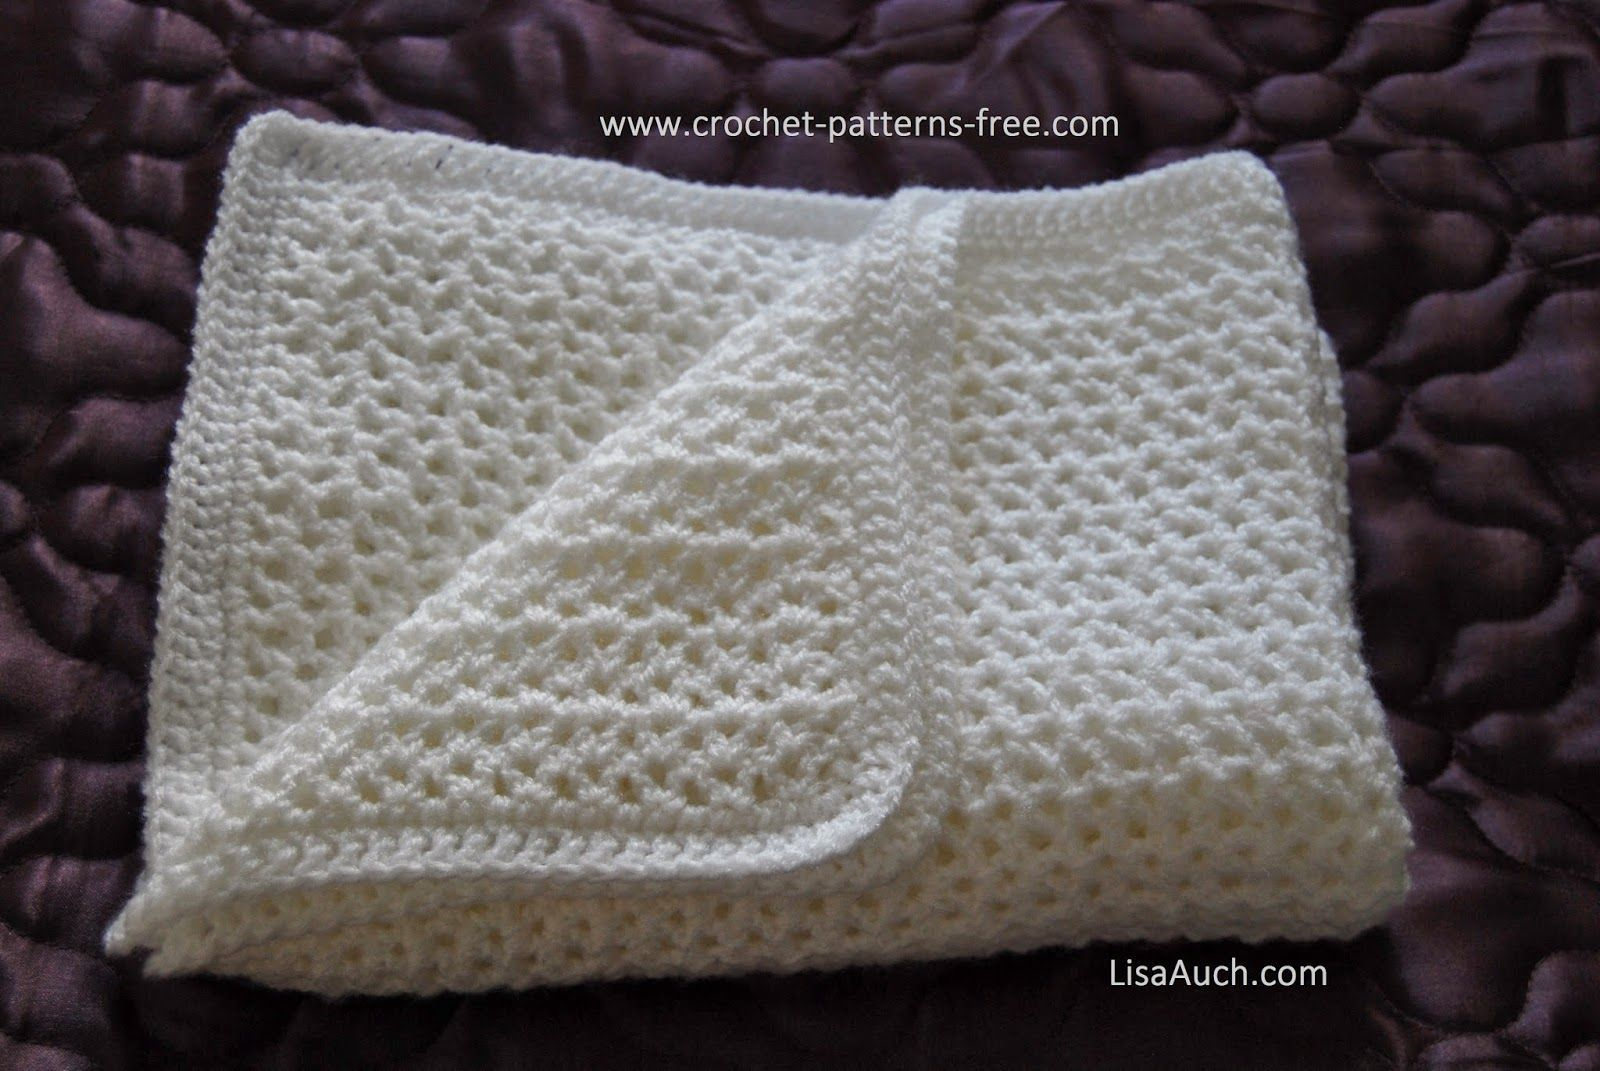 Crochet Blanket Pattern For Beginners How To Crochet An Easy Ba Blanket Ideal For Beginners Free